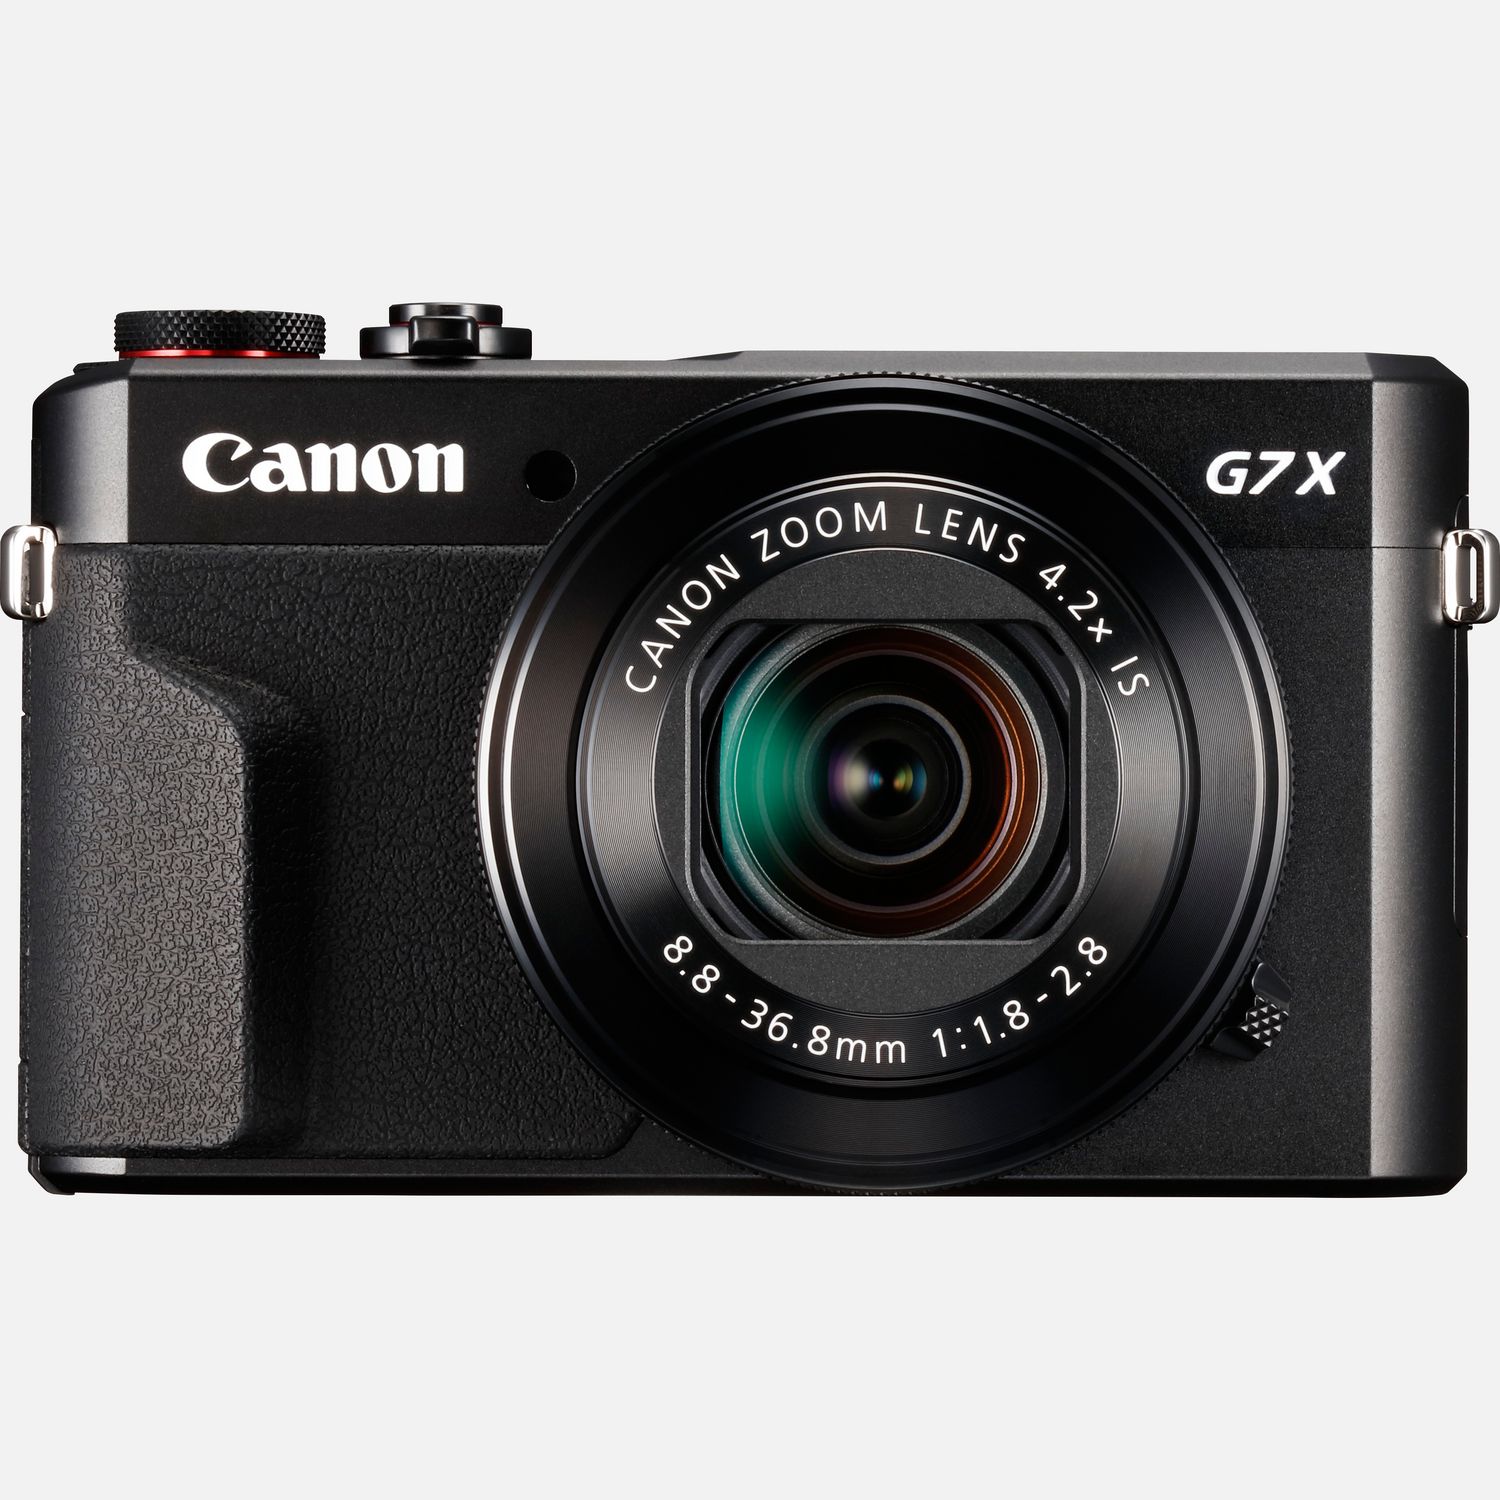 Canon PowerShot G7 X Mark II Camera in Wi-Fi Cameras at Canon